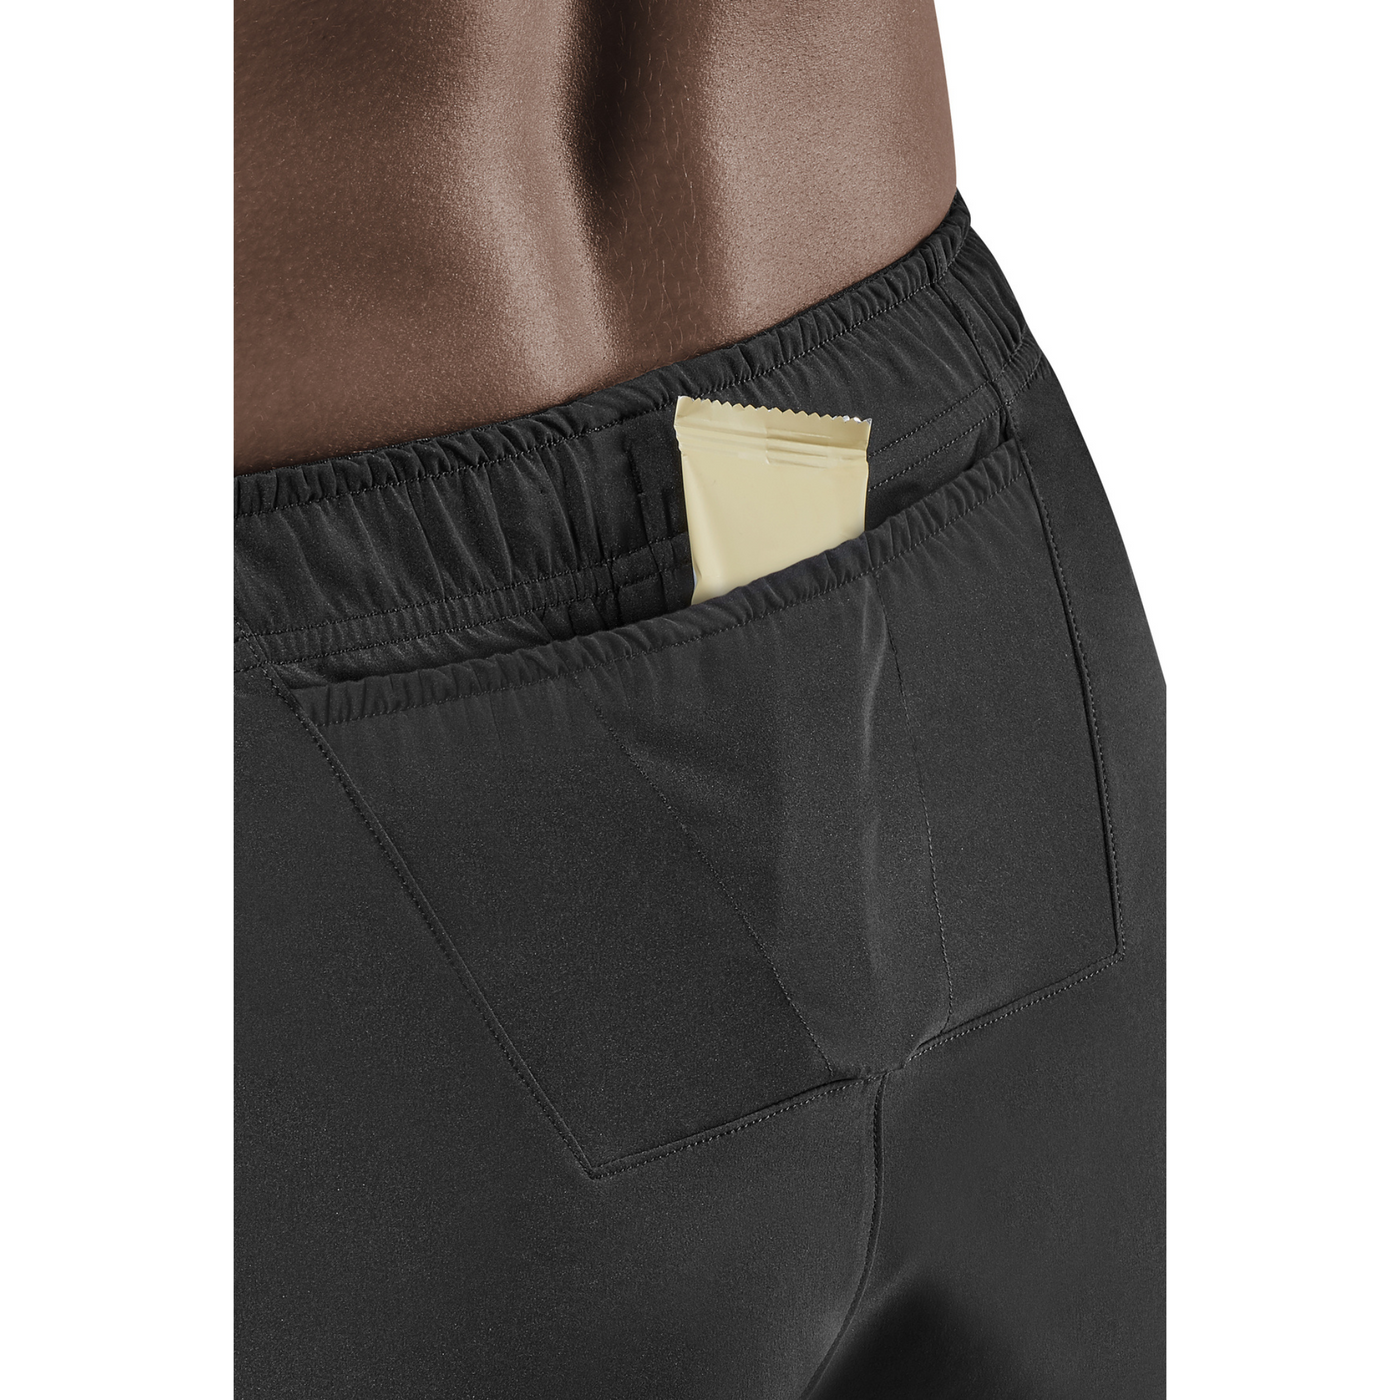 Race Loose Fit Shorts, Men, Black, Back Detail 2